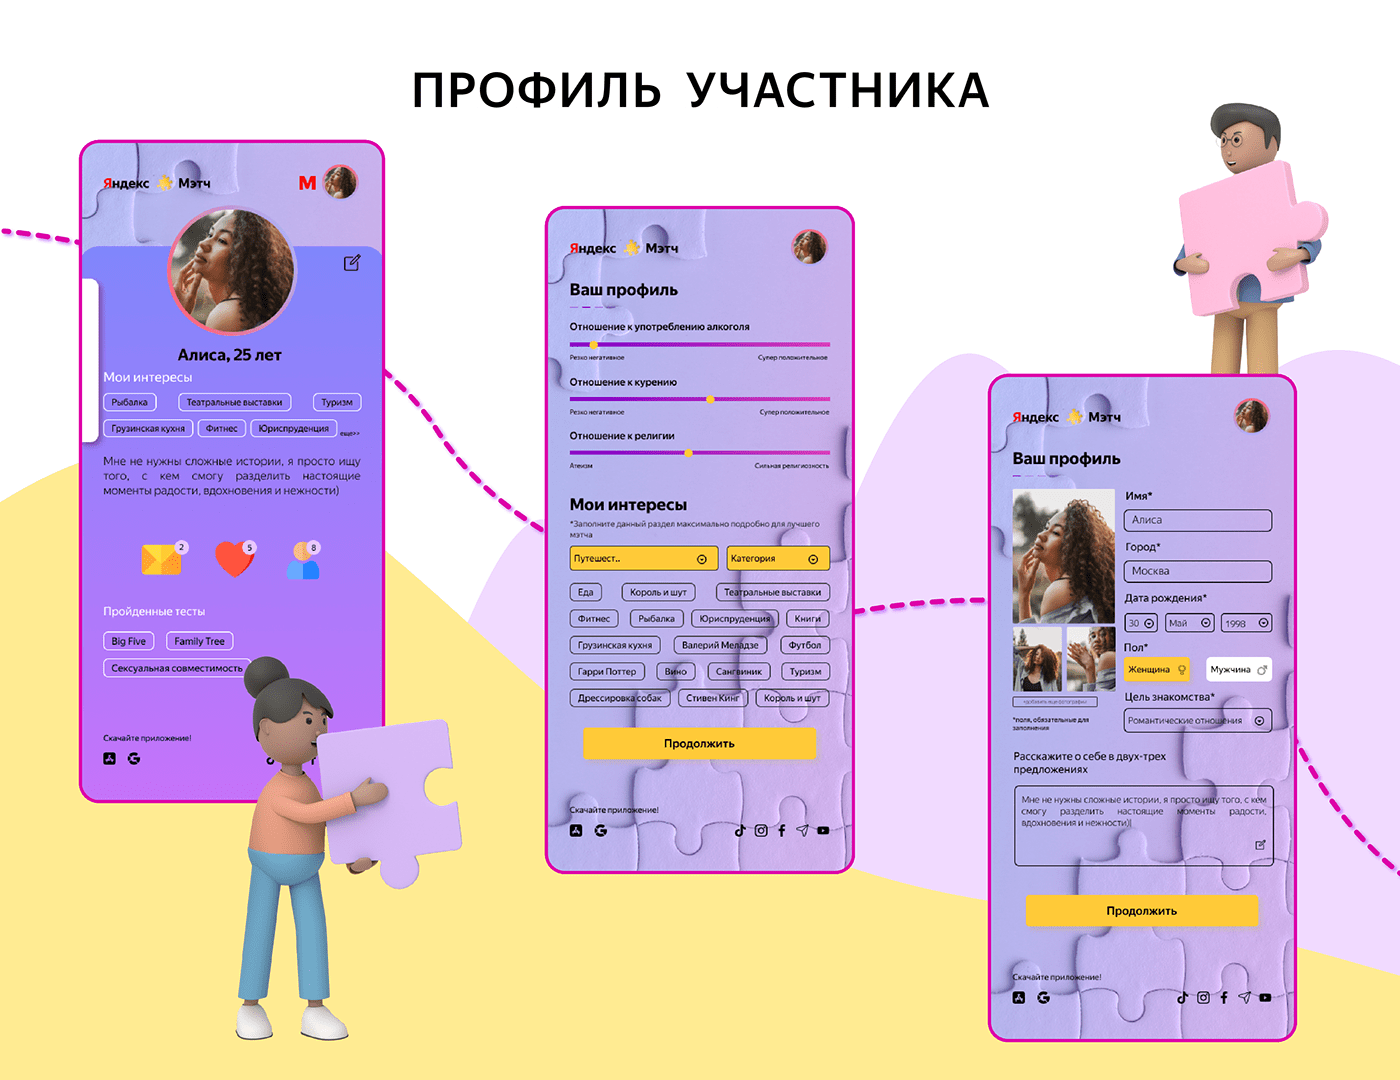 Figma ЗНАКОМСТВА Dating mobile UI/UX веб-дизайн лендинг дизайн сайта Яндекс Мэтч